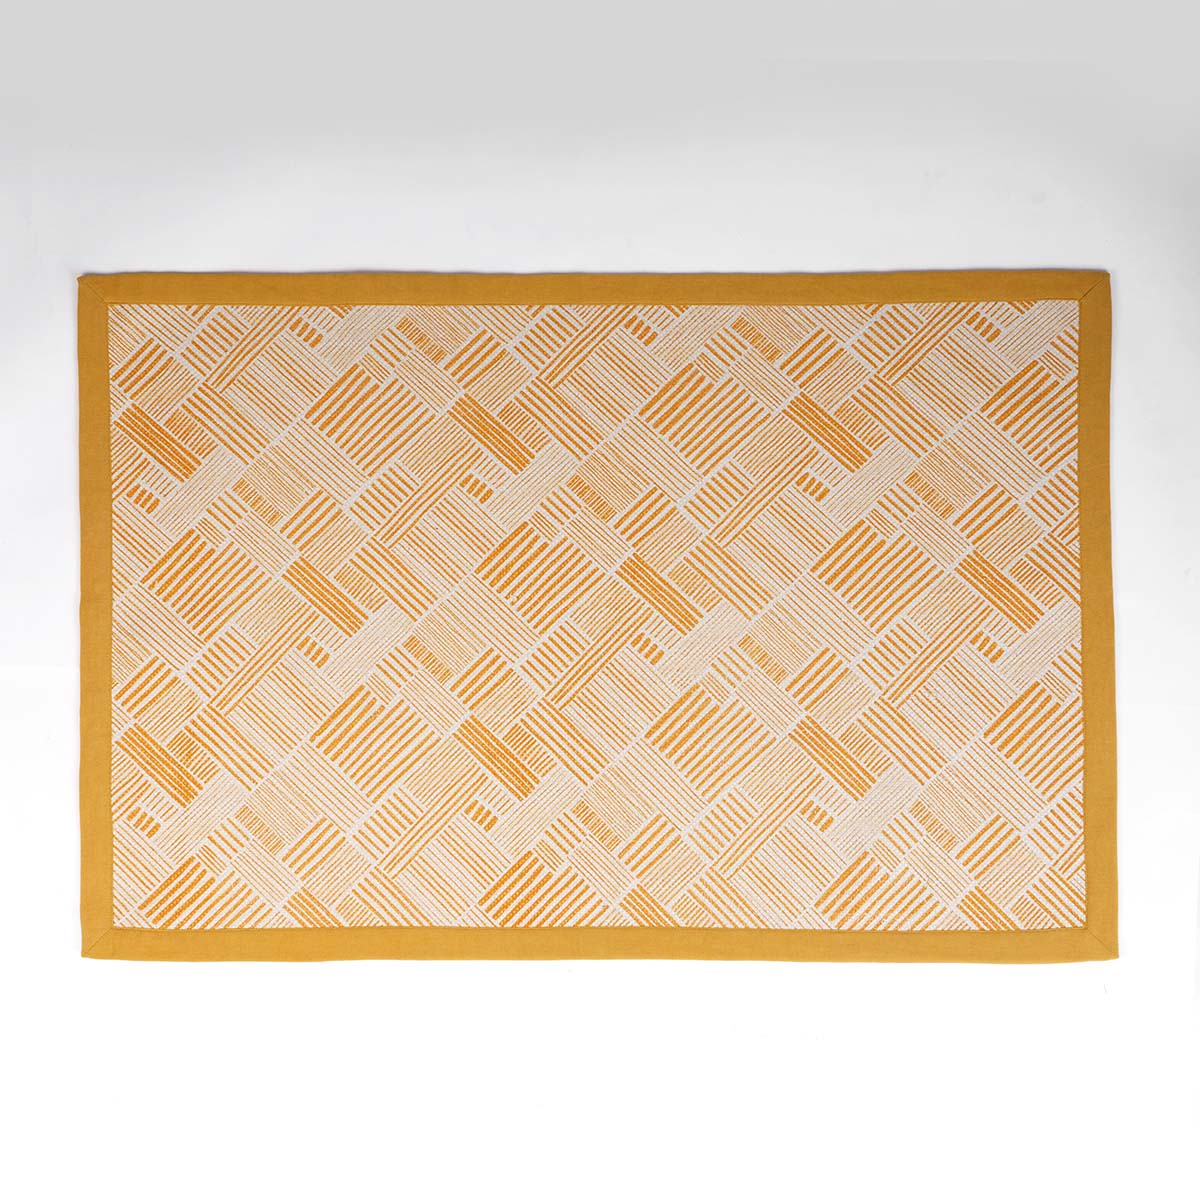 MODERN RETRO - Mustard yellow cotton rug, stripe print, mid century modern, sizes available